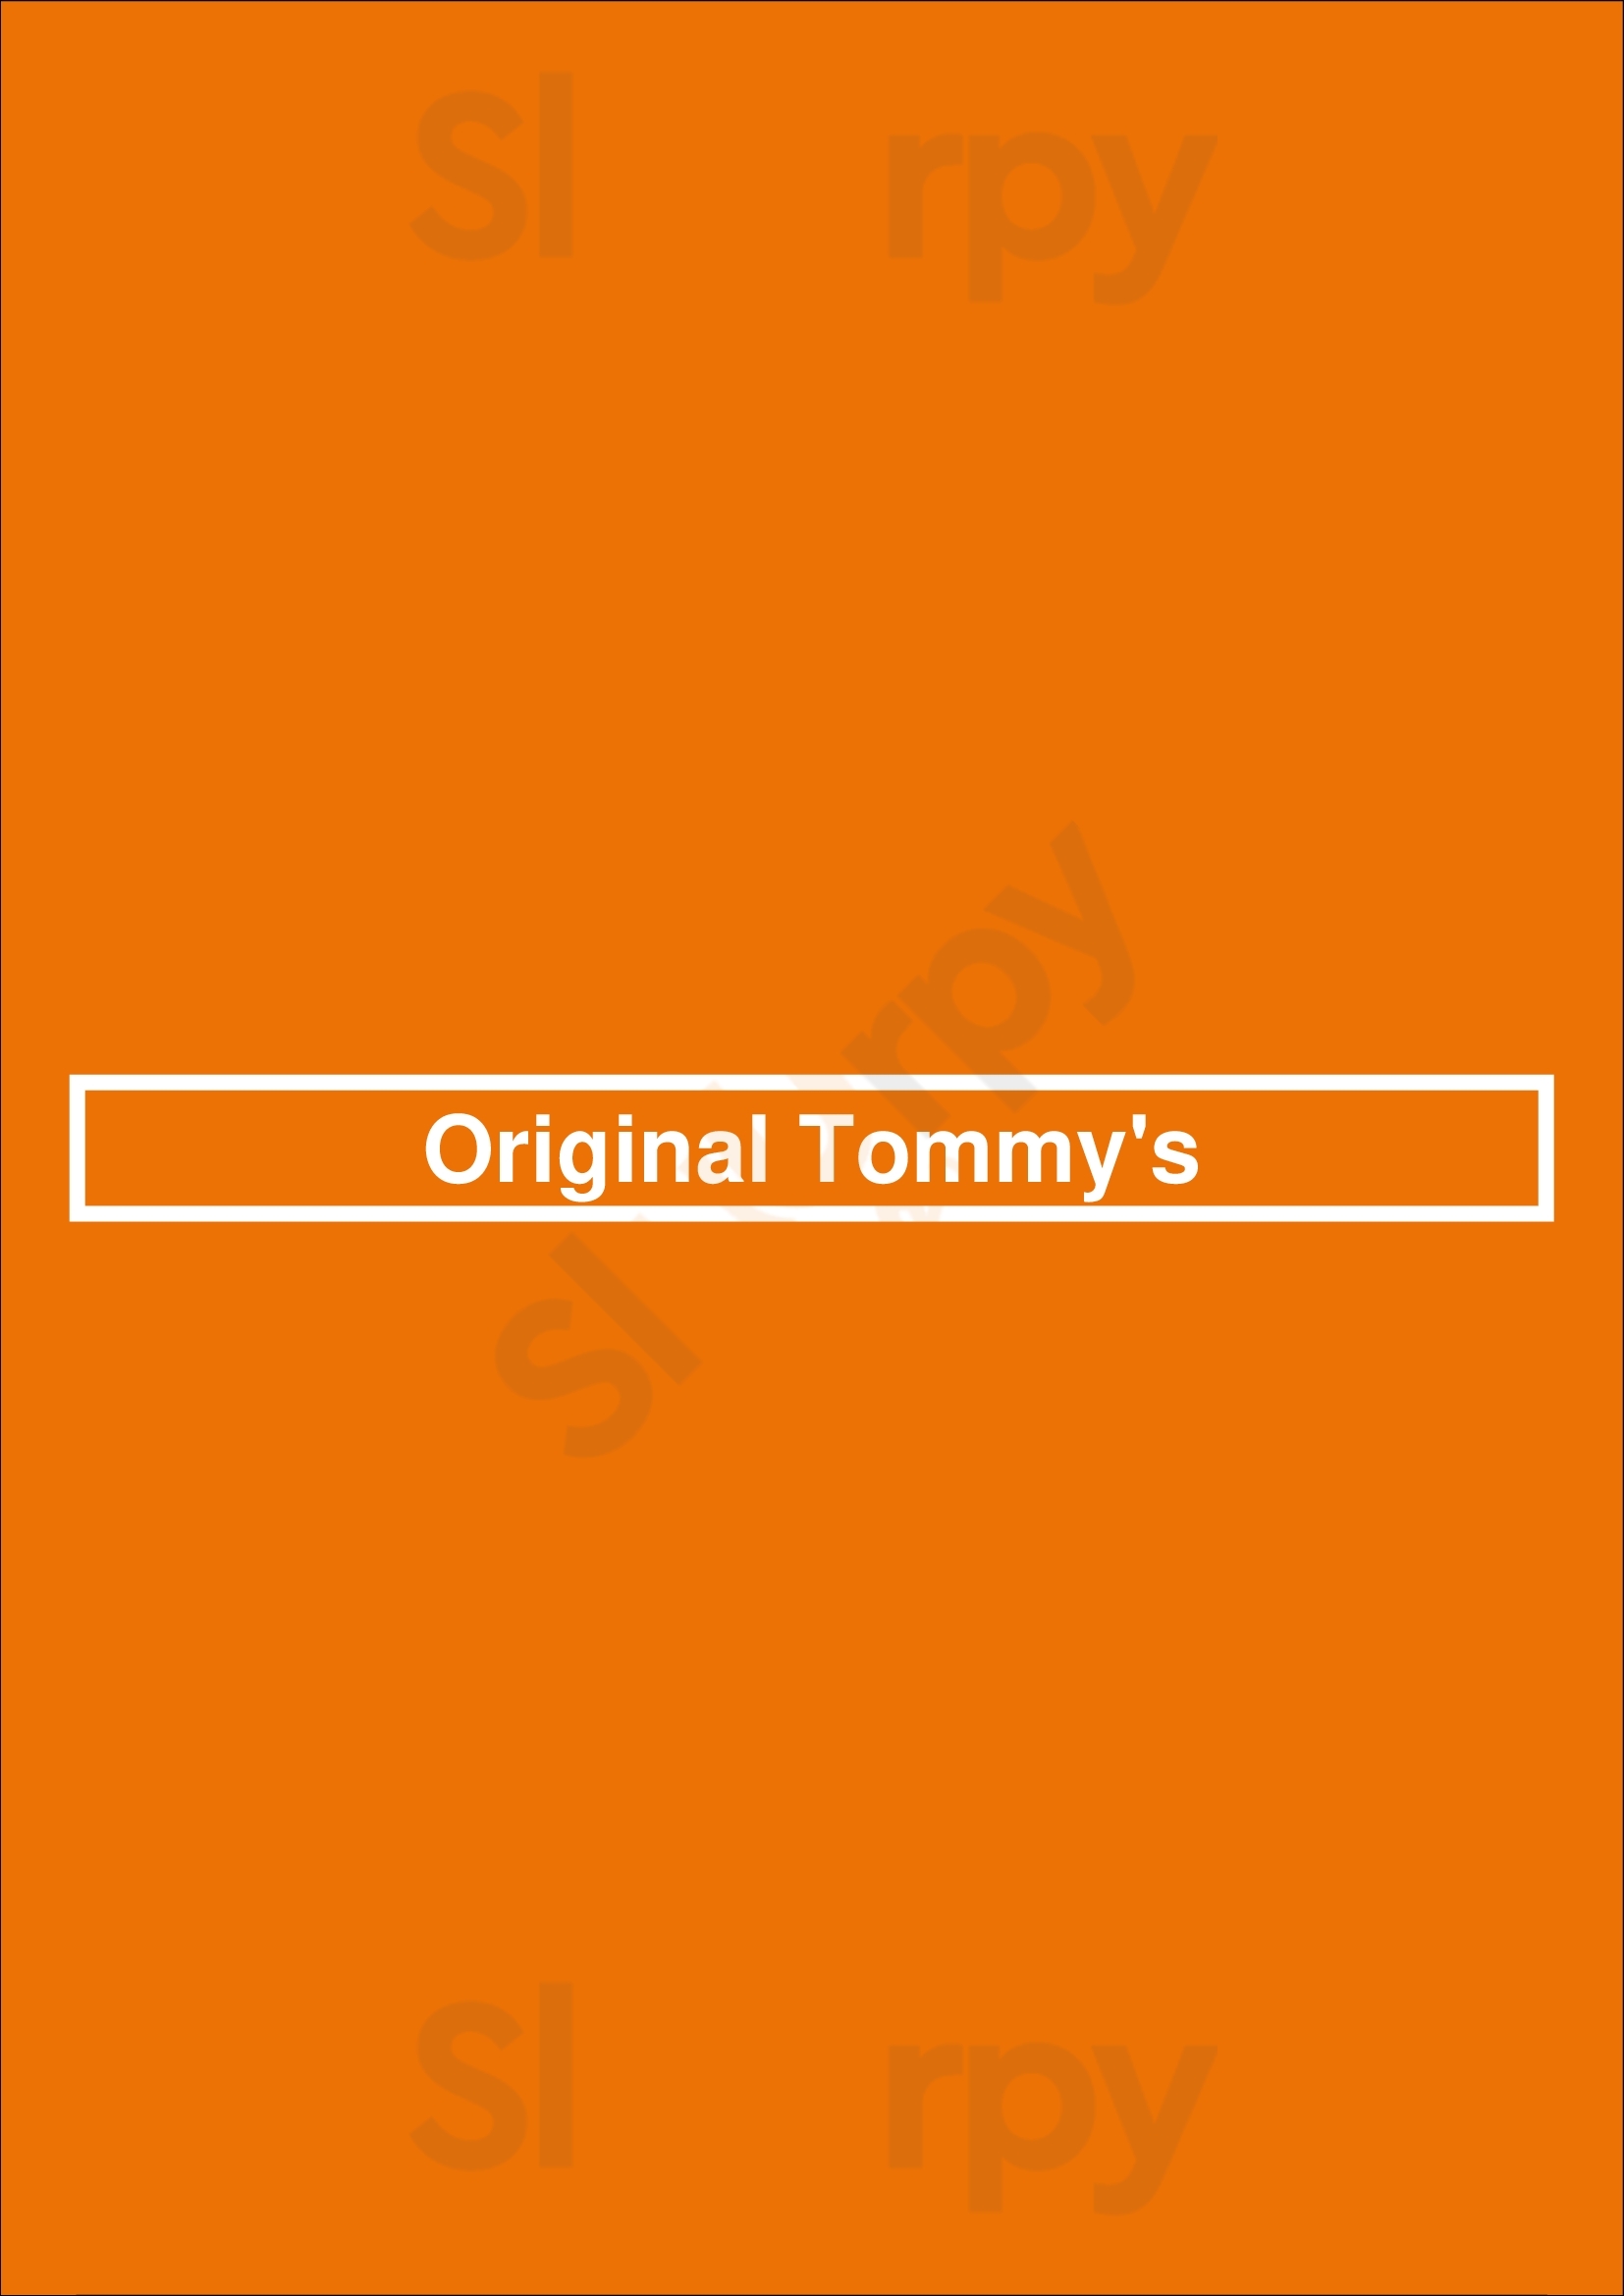 Original Tommy's Simi Valley Menu - 1